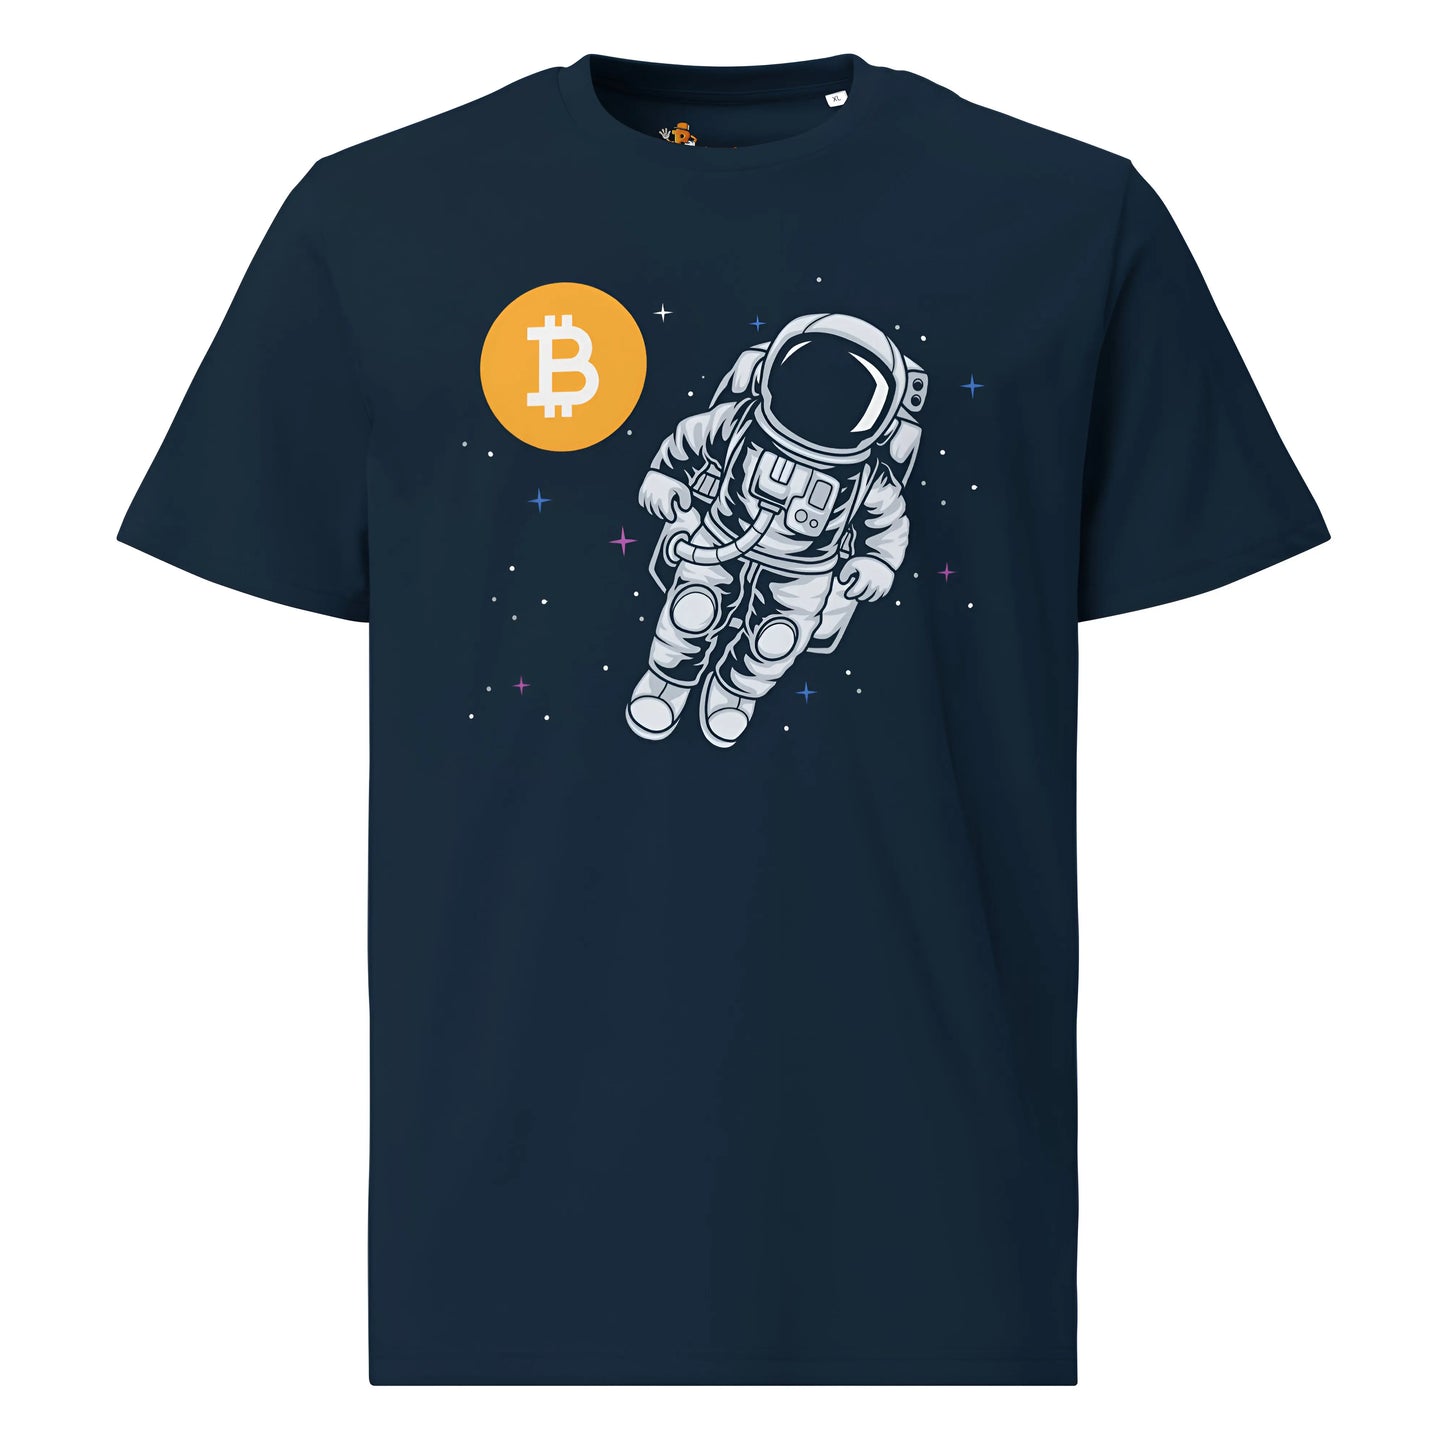 Bitcoin Moonwalk - Premium Unisex Organic Cotton Bitcoin T-shirt Navy